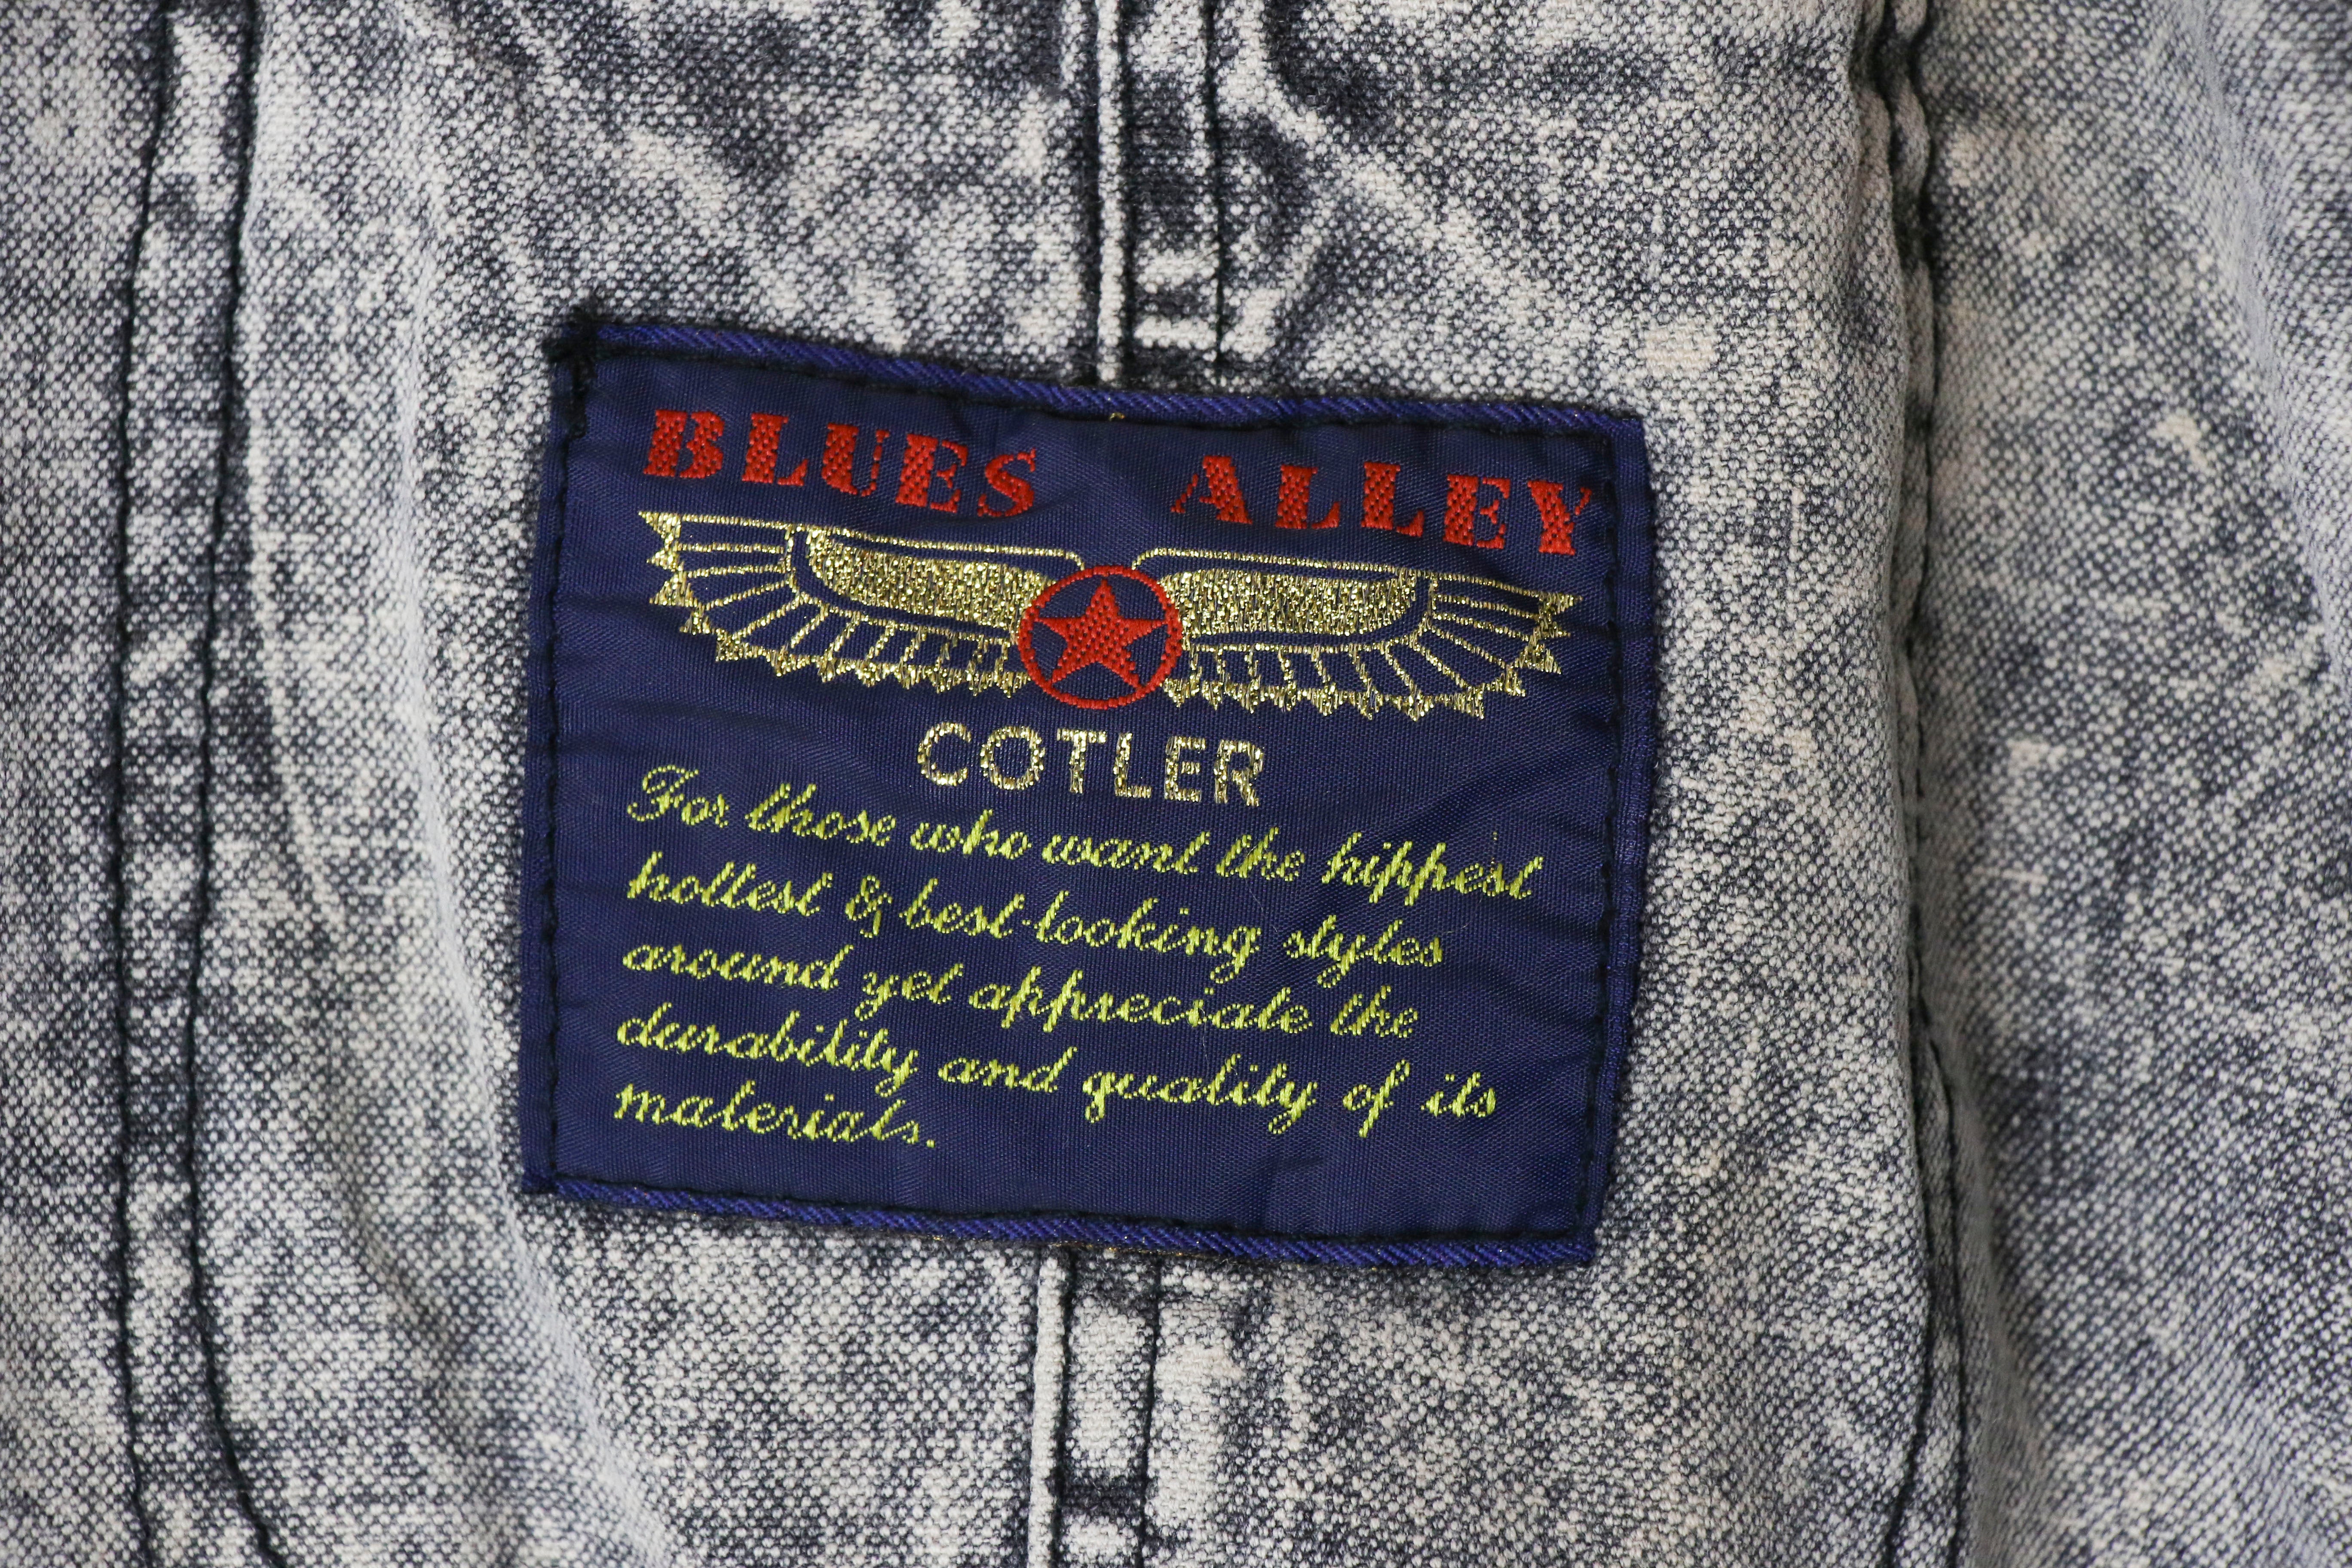 [S] '80s Cotler Stone Wash Shorts